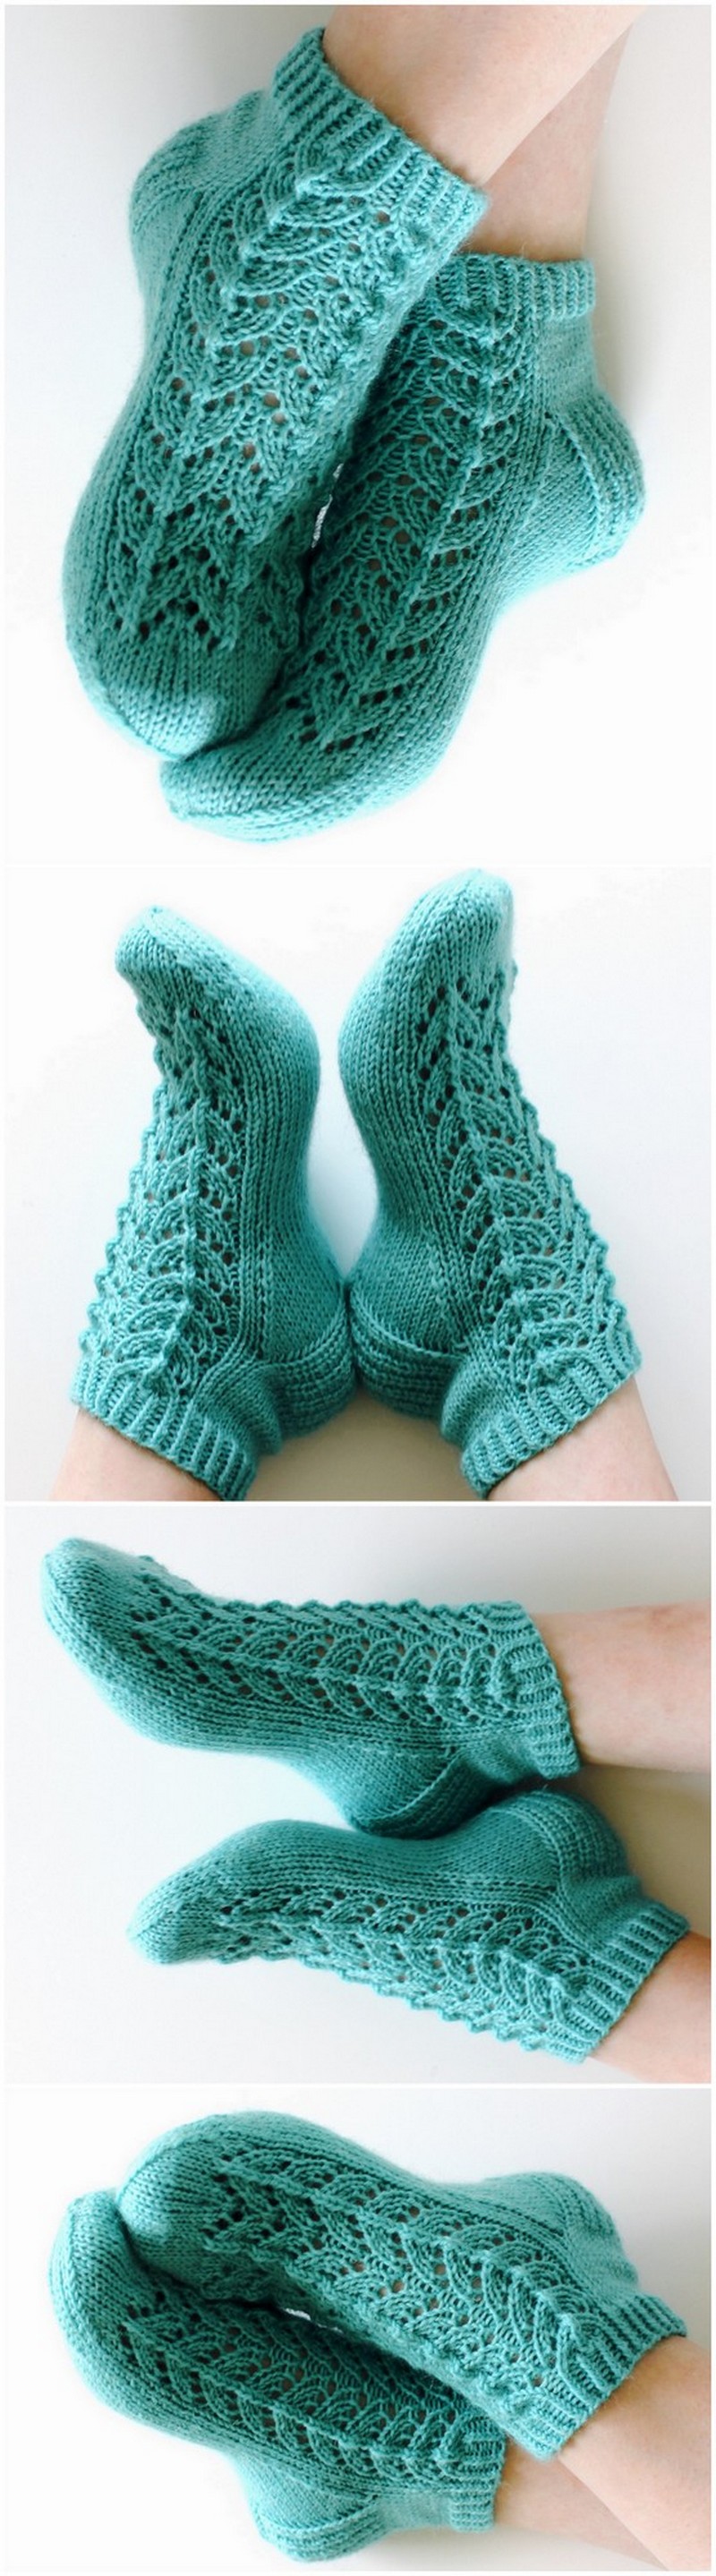 Crochet Slipper Pattern (41)